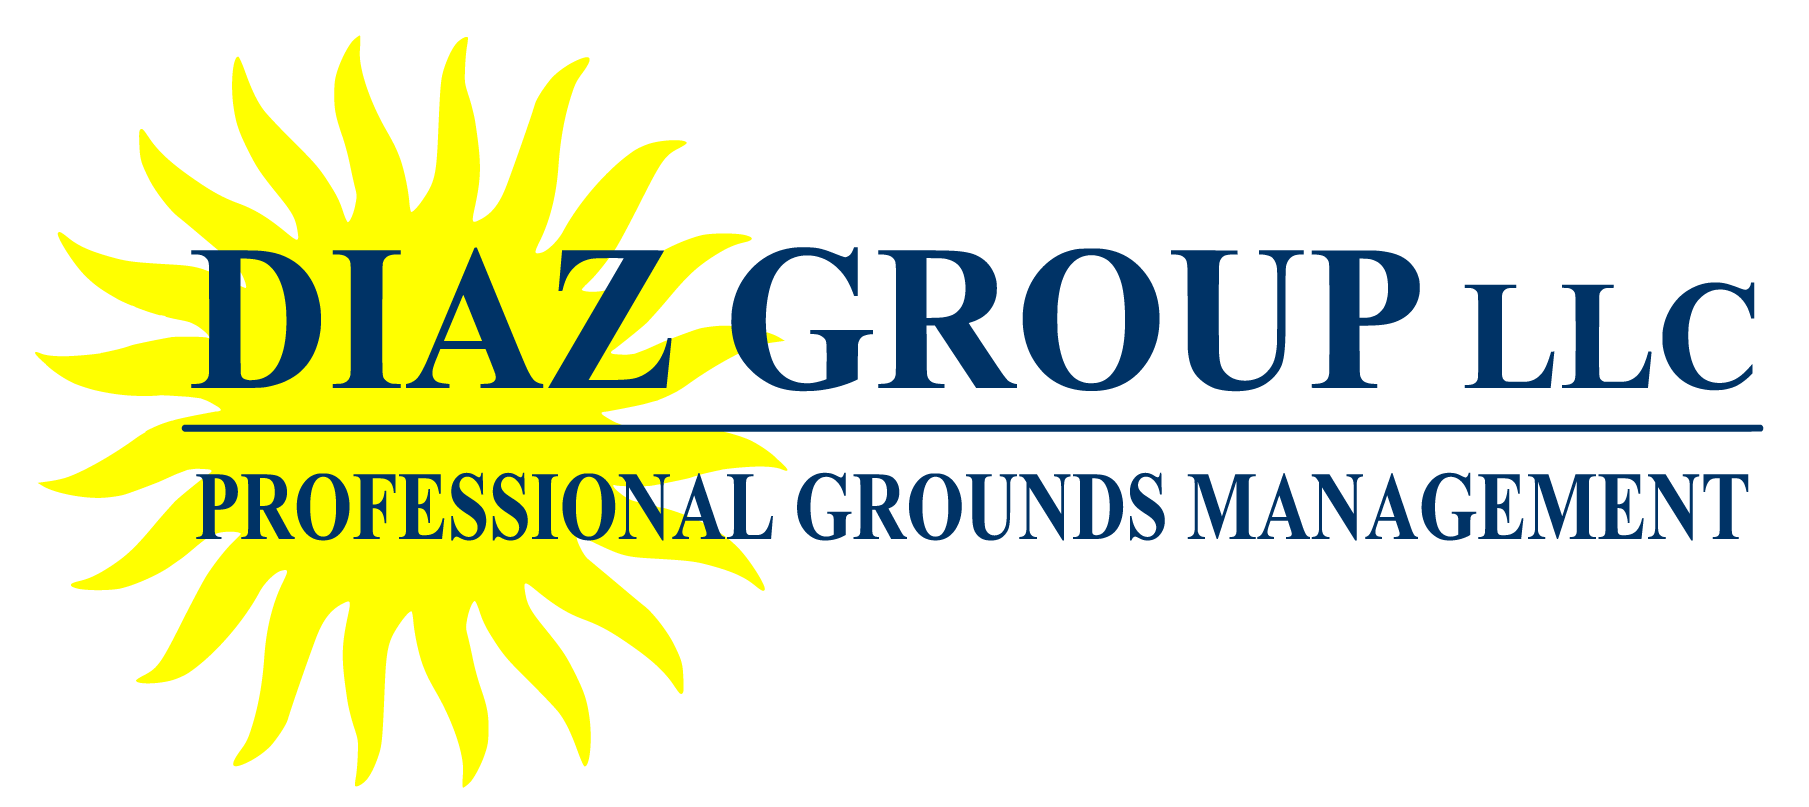 DIaz Group Professional Grounds Management